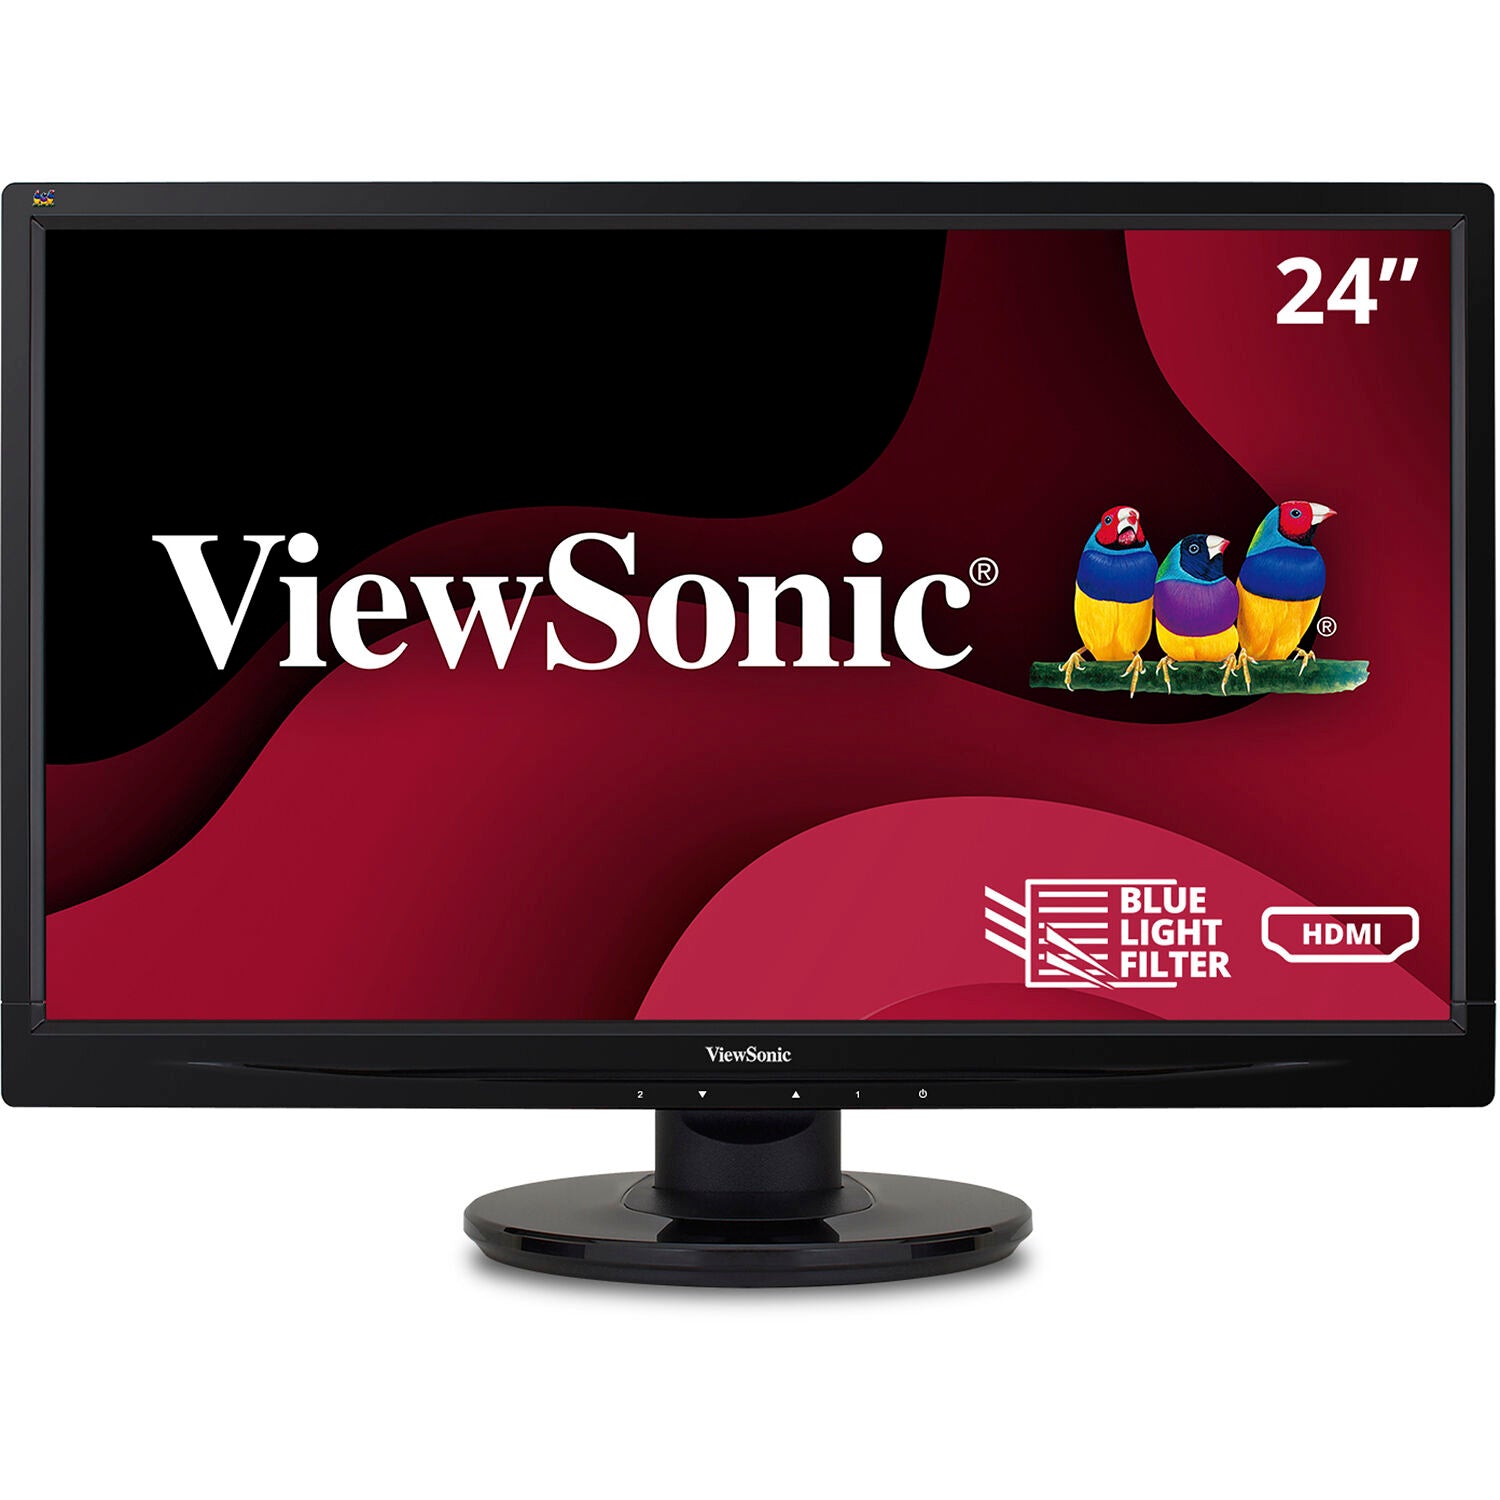 ViewSonic VA2446MH-LED-S 24" Full HD 1080p LED Monitor - Certified Refurbished